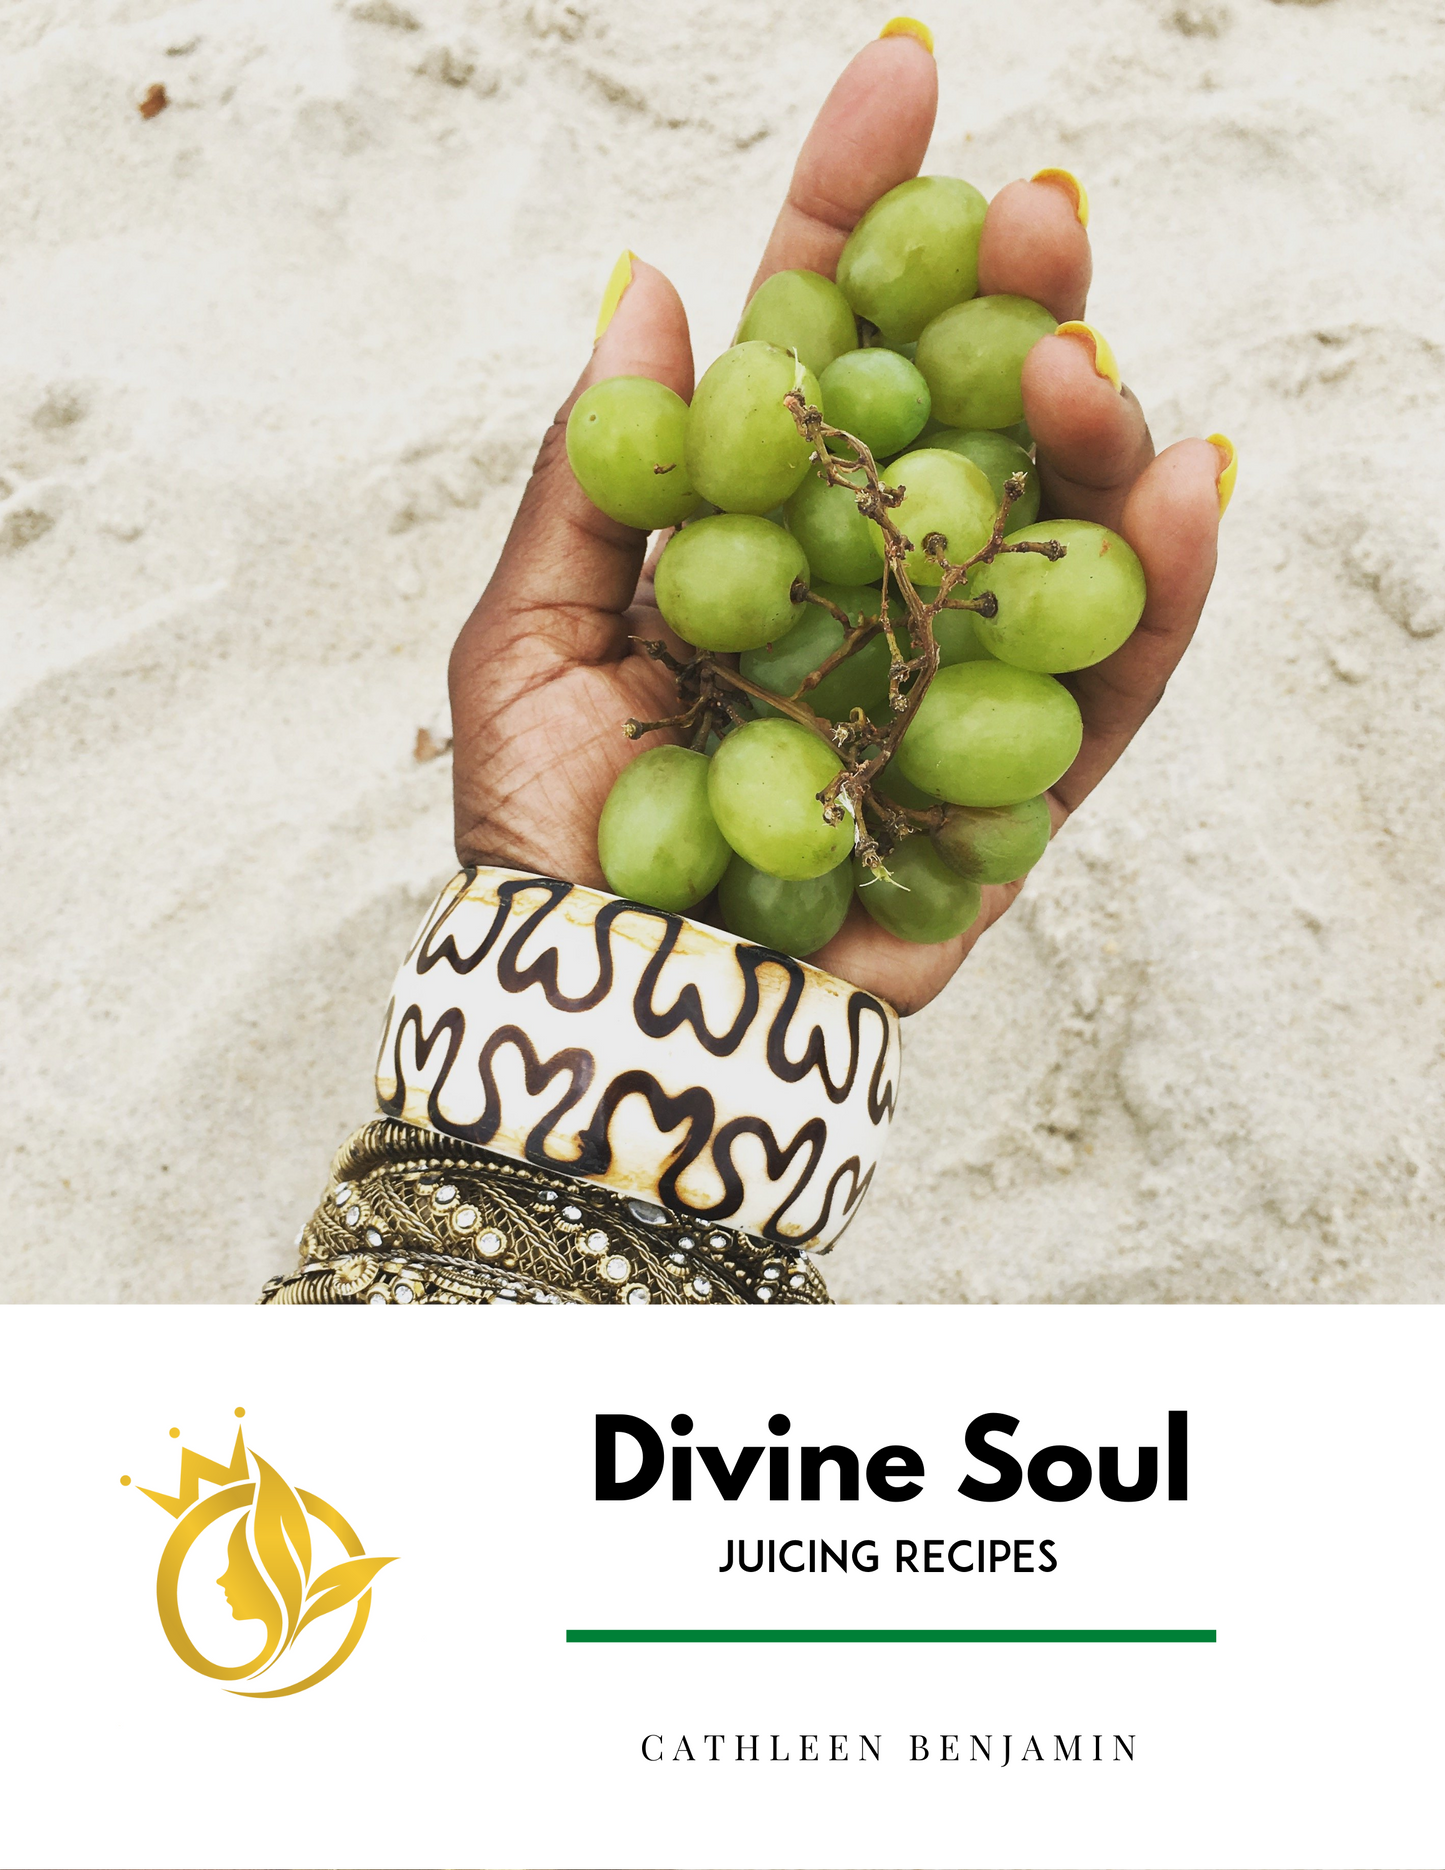 Divine Soul Juicing Recipes (e-book)